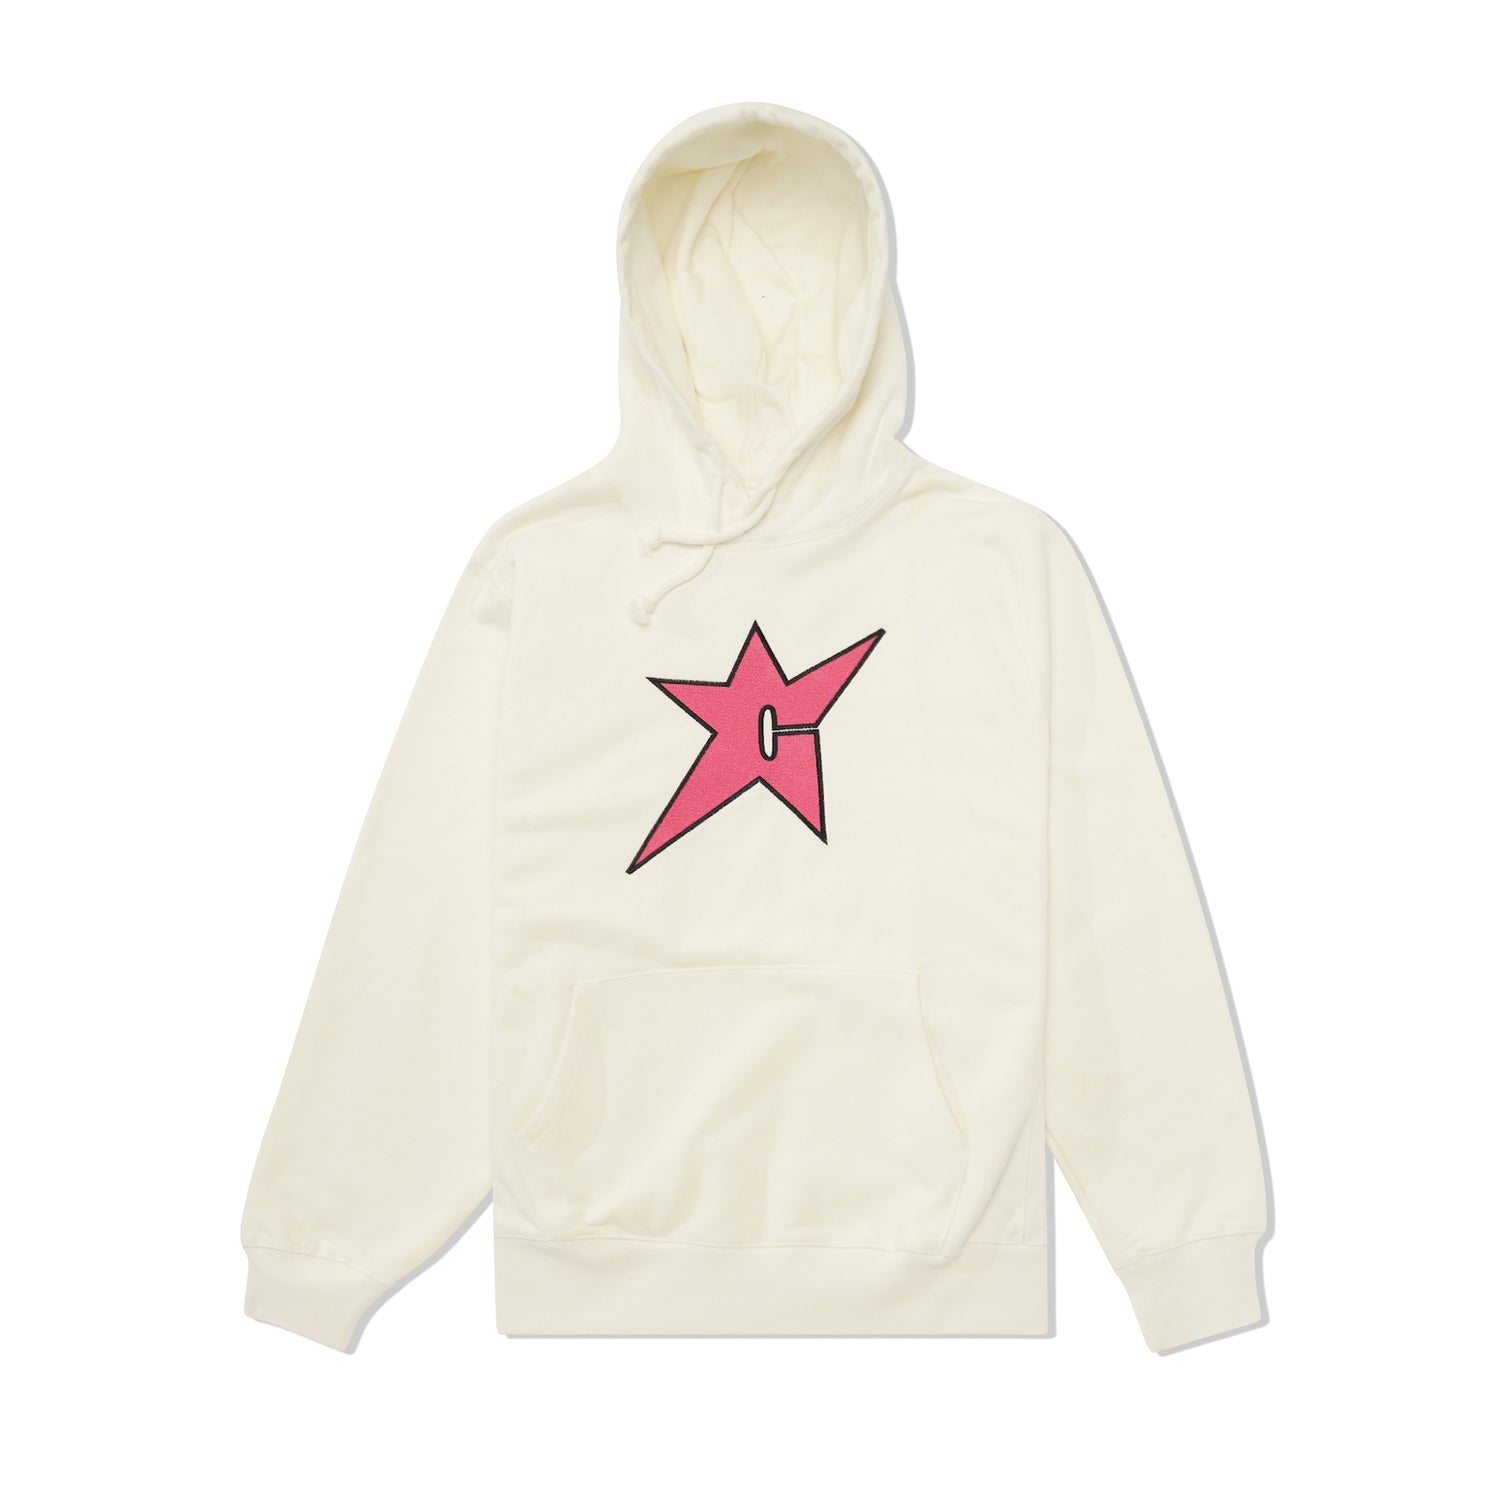 C-Star Pullover, White